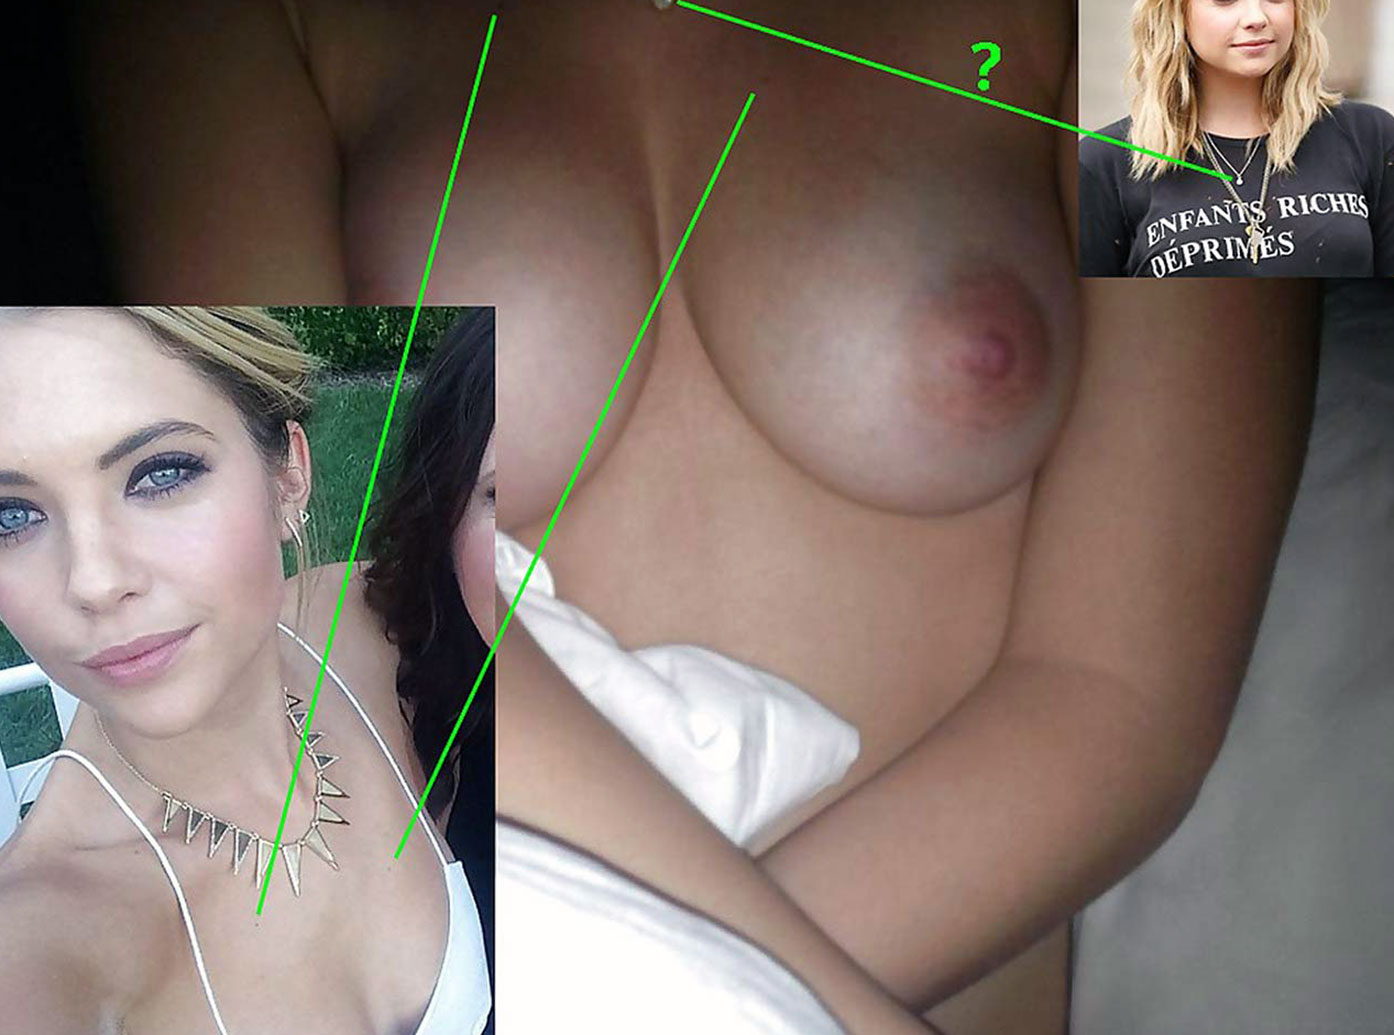 Kat Dennings Celebrity Nude Pics Celeb Nudes Photos